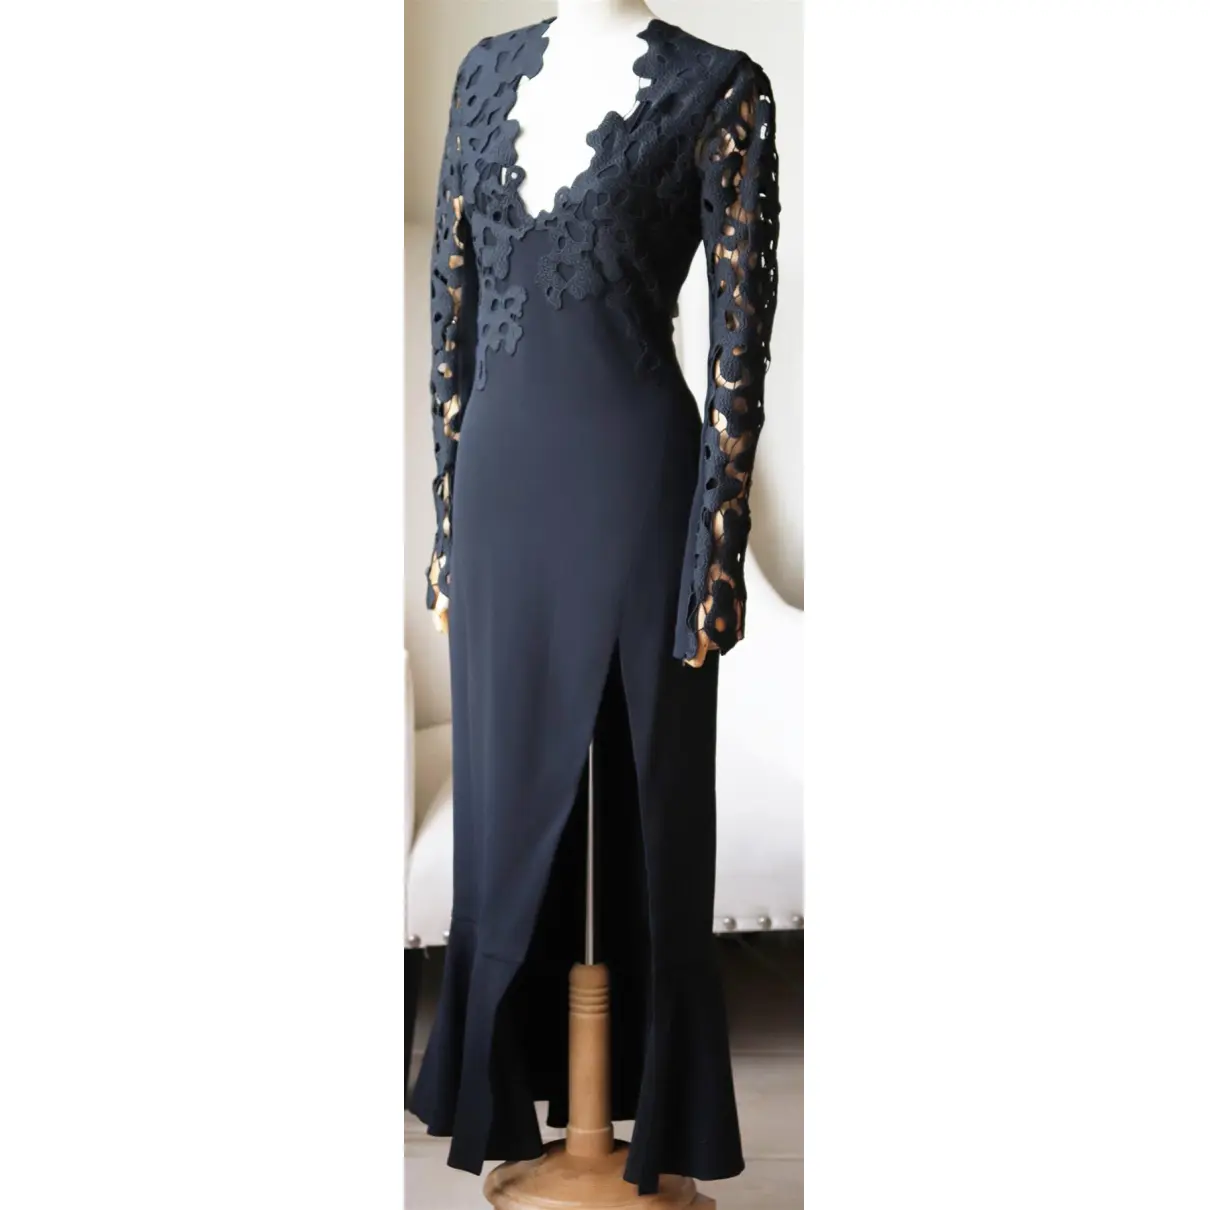 Buy David Koma Dress online